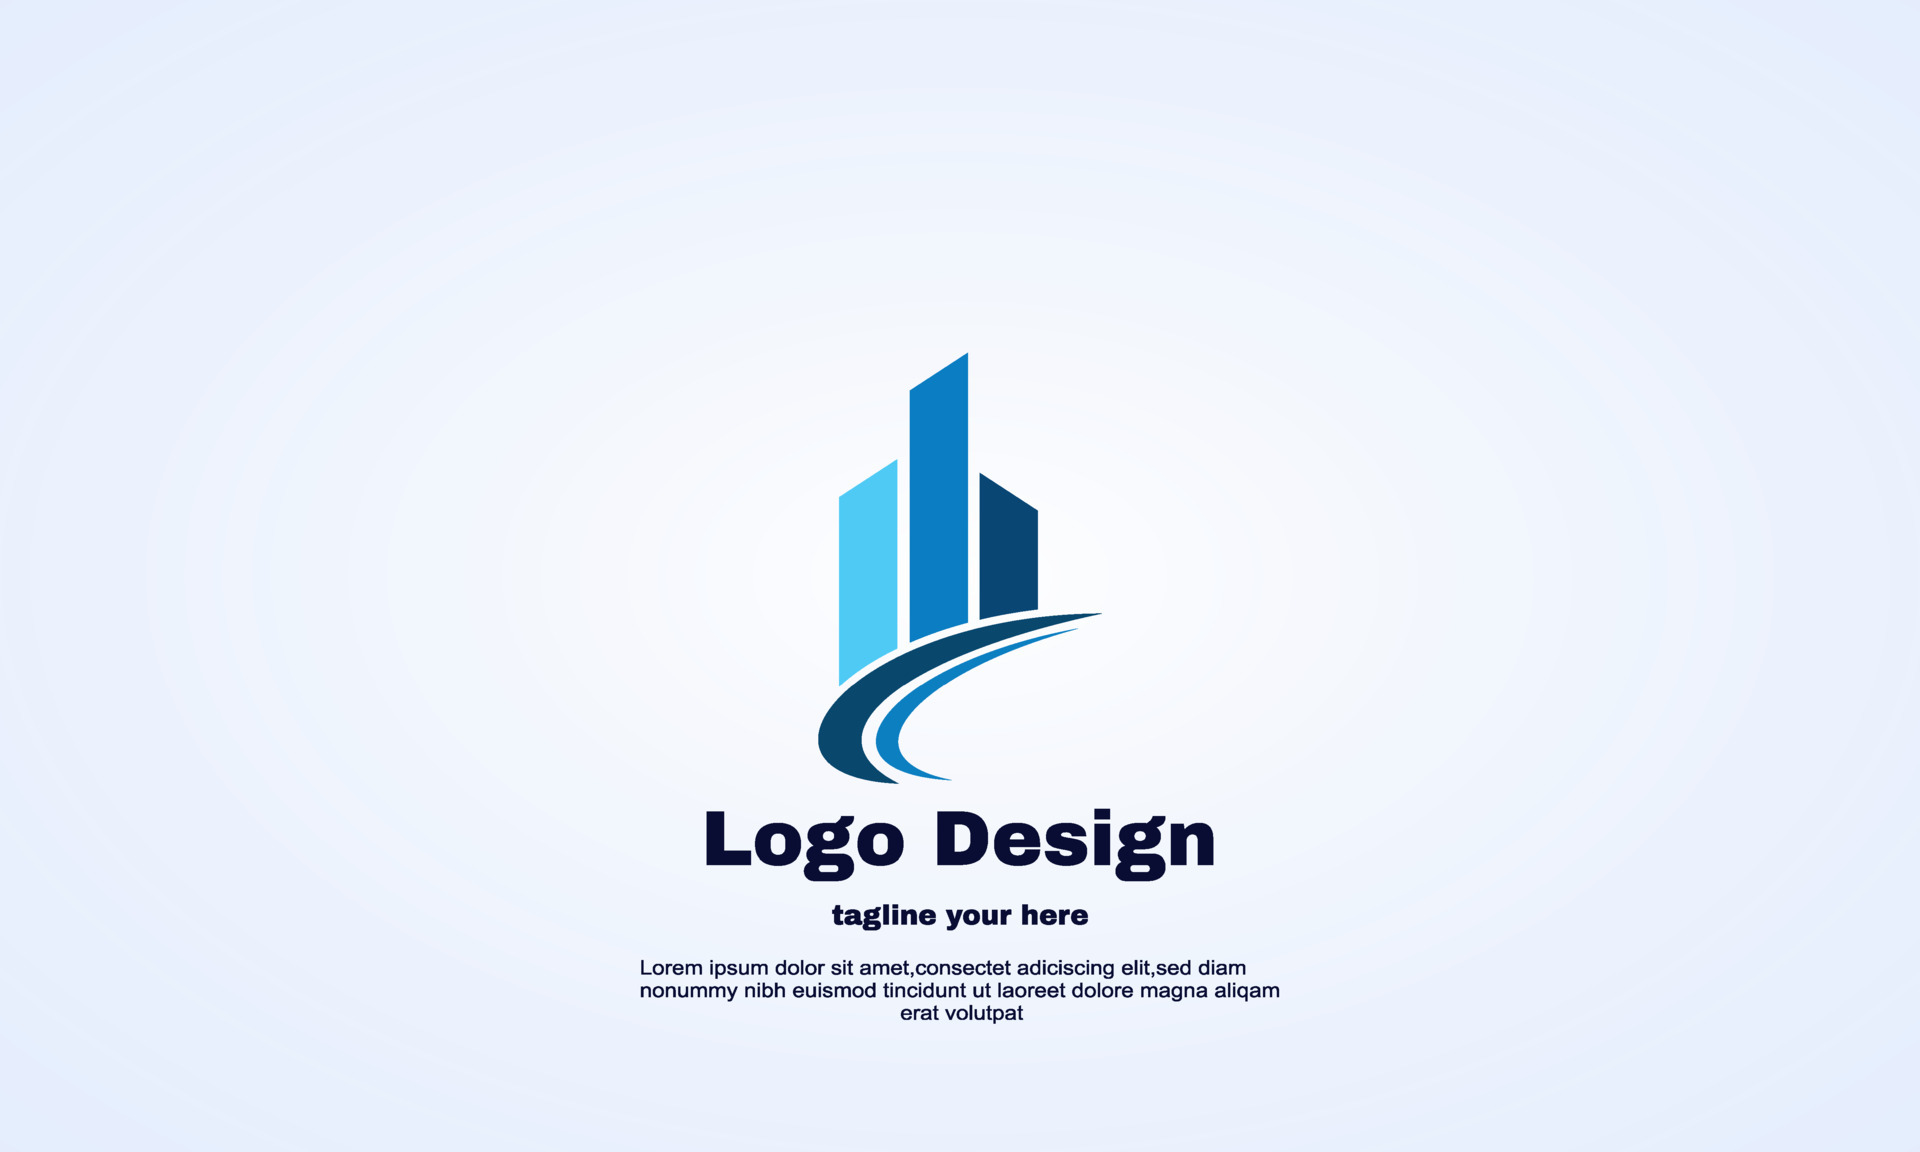 Premium Vector | Creative contraction logo